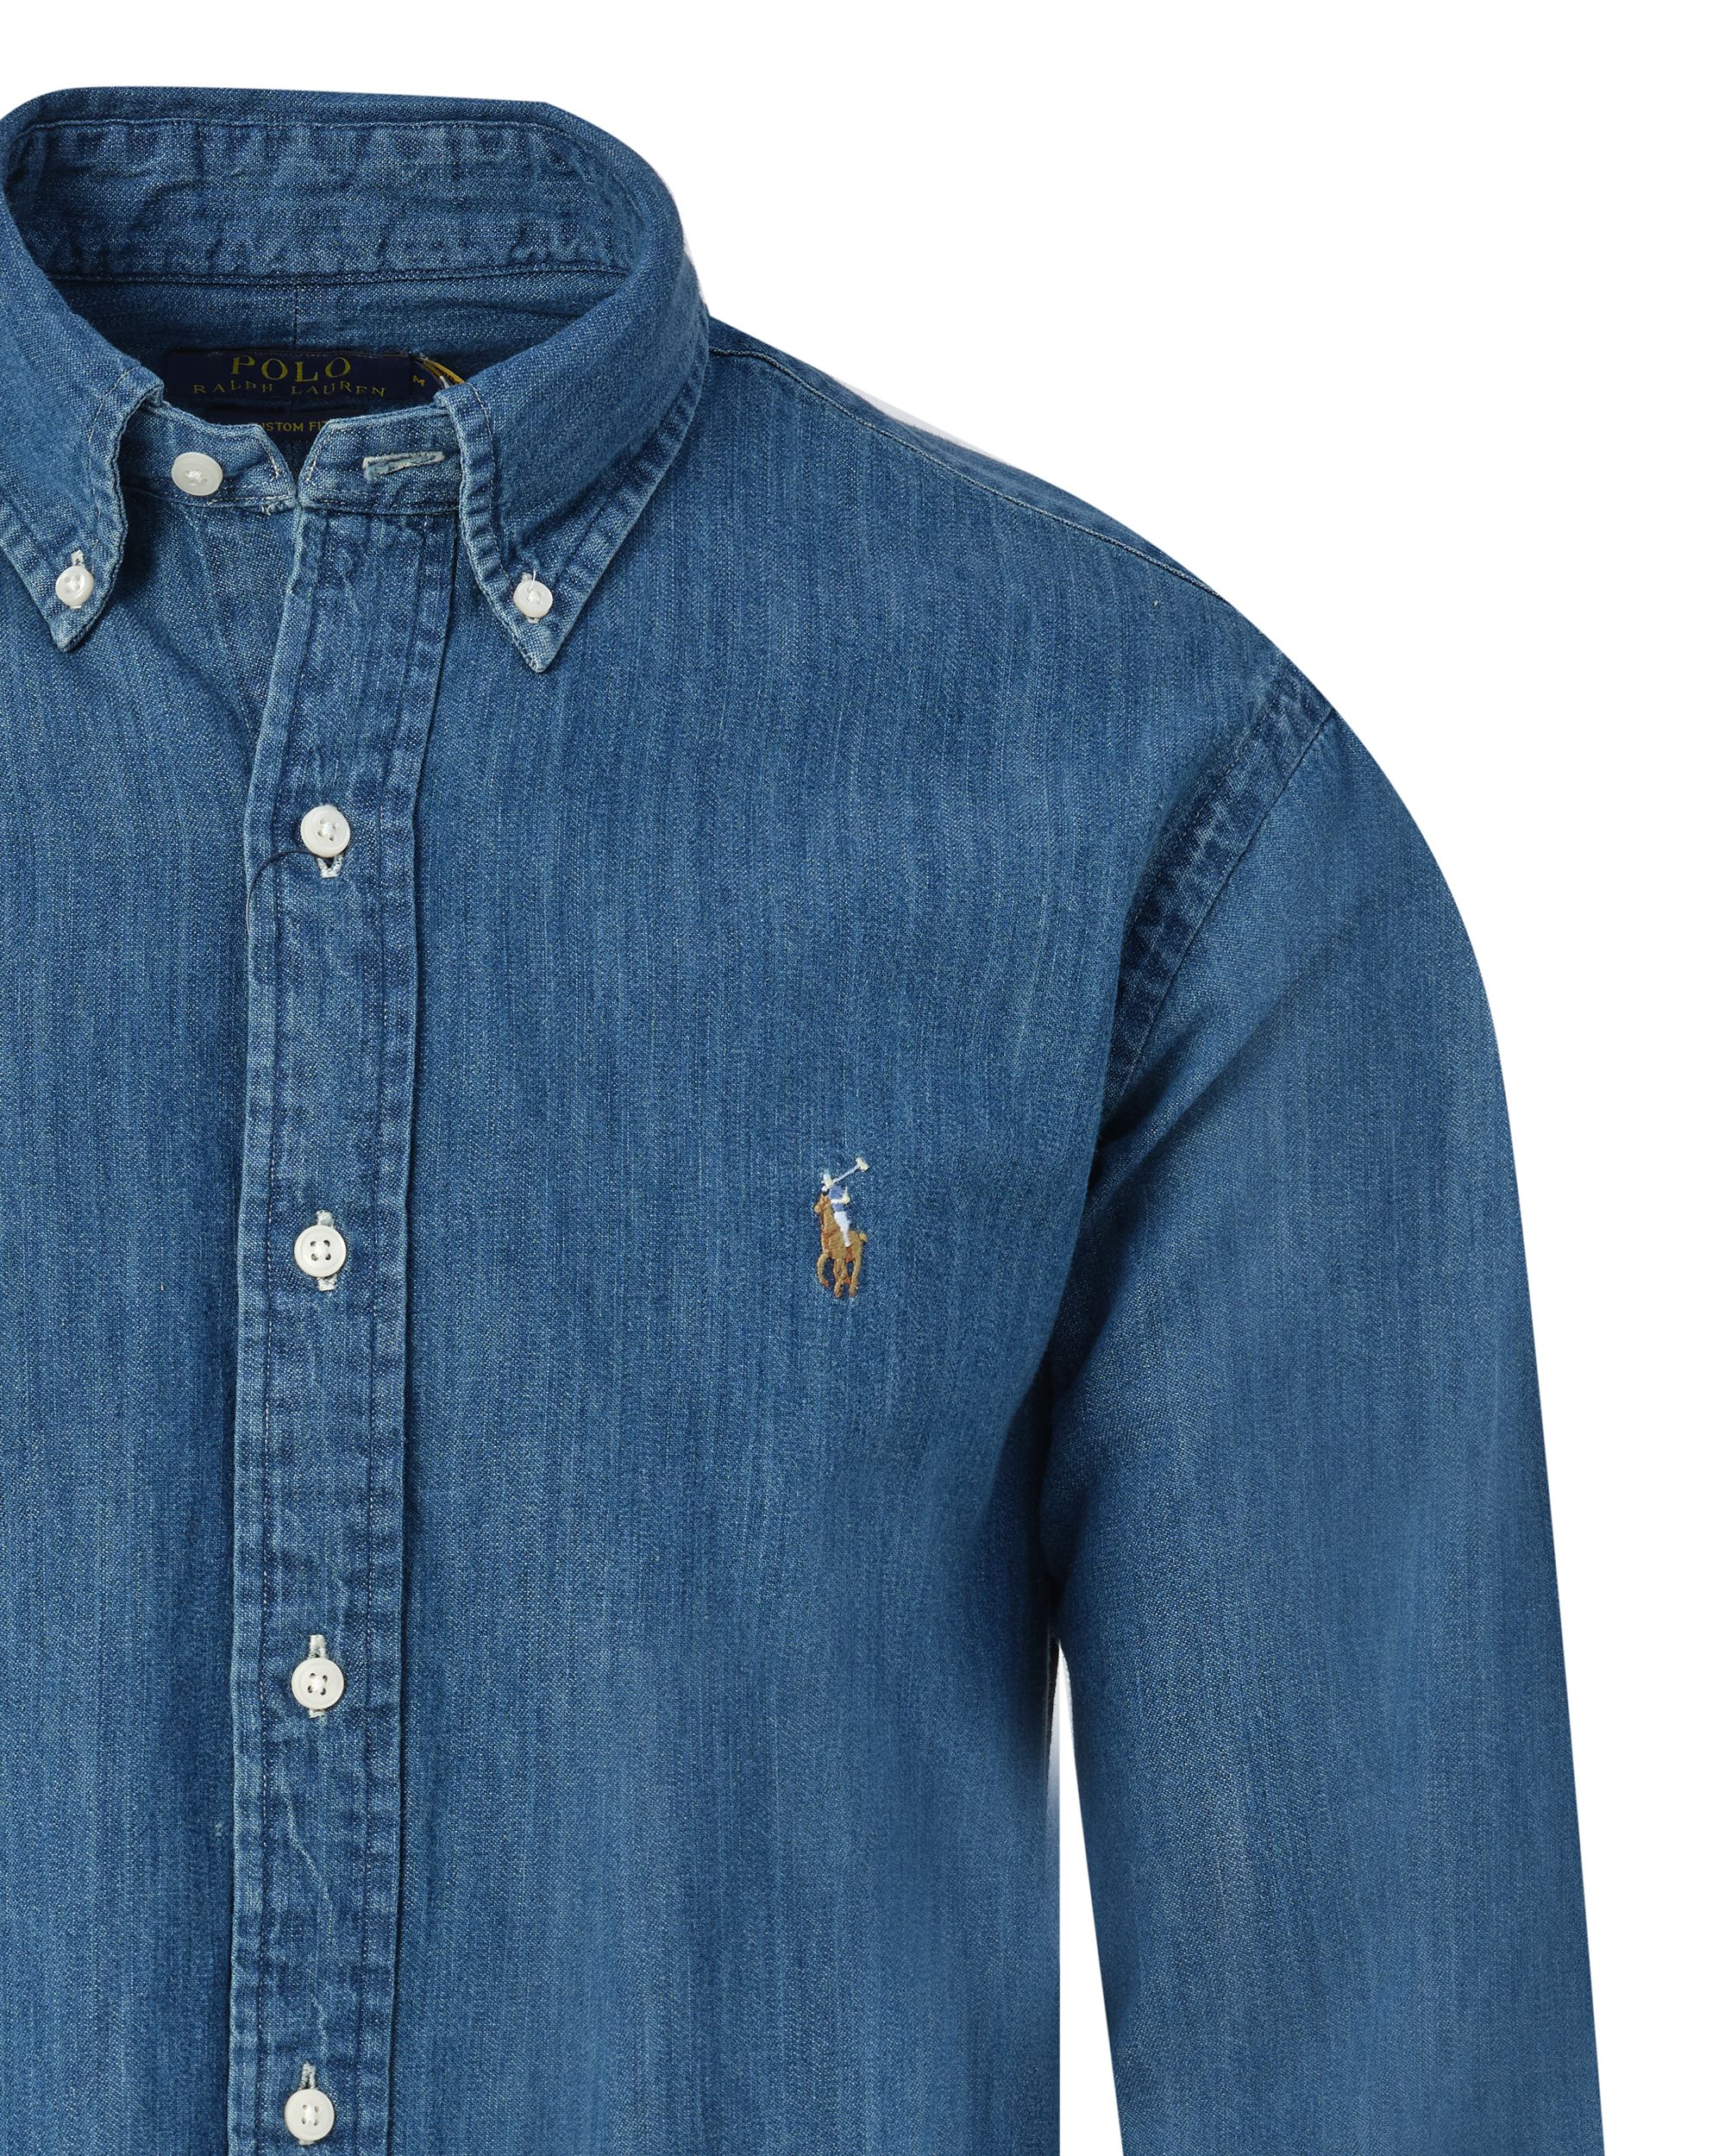 Polo Ralph Lauren Casual Overhemd LM Blauw 086676-001-L